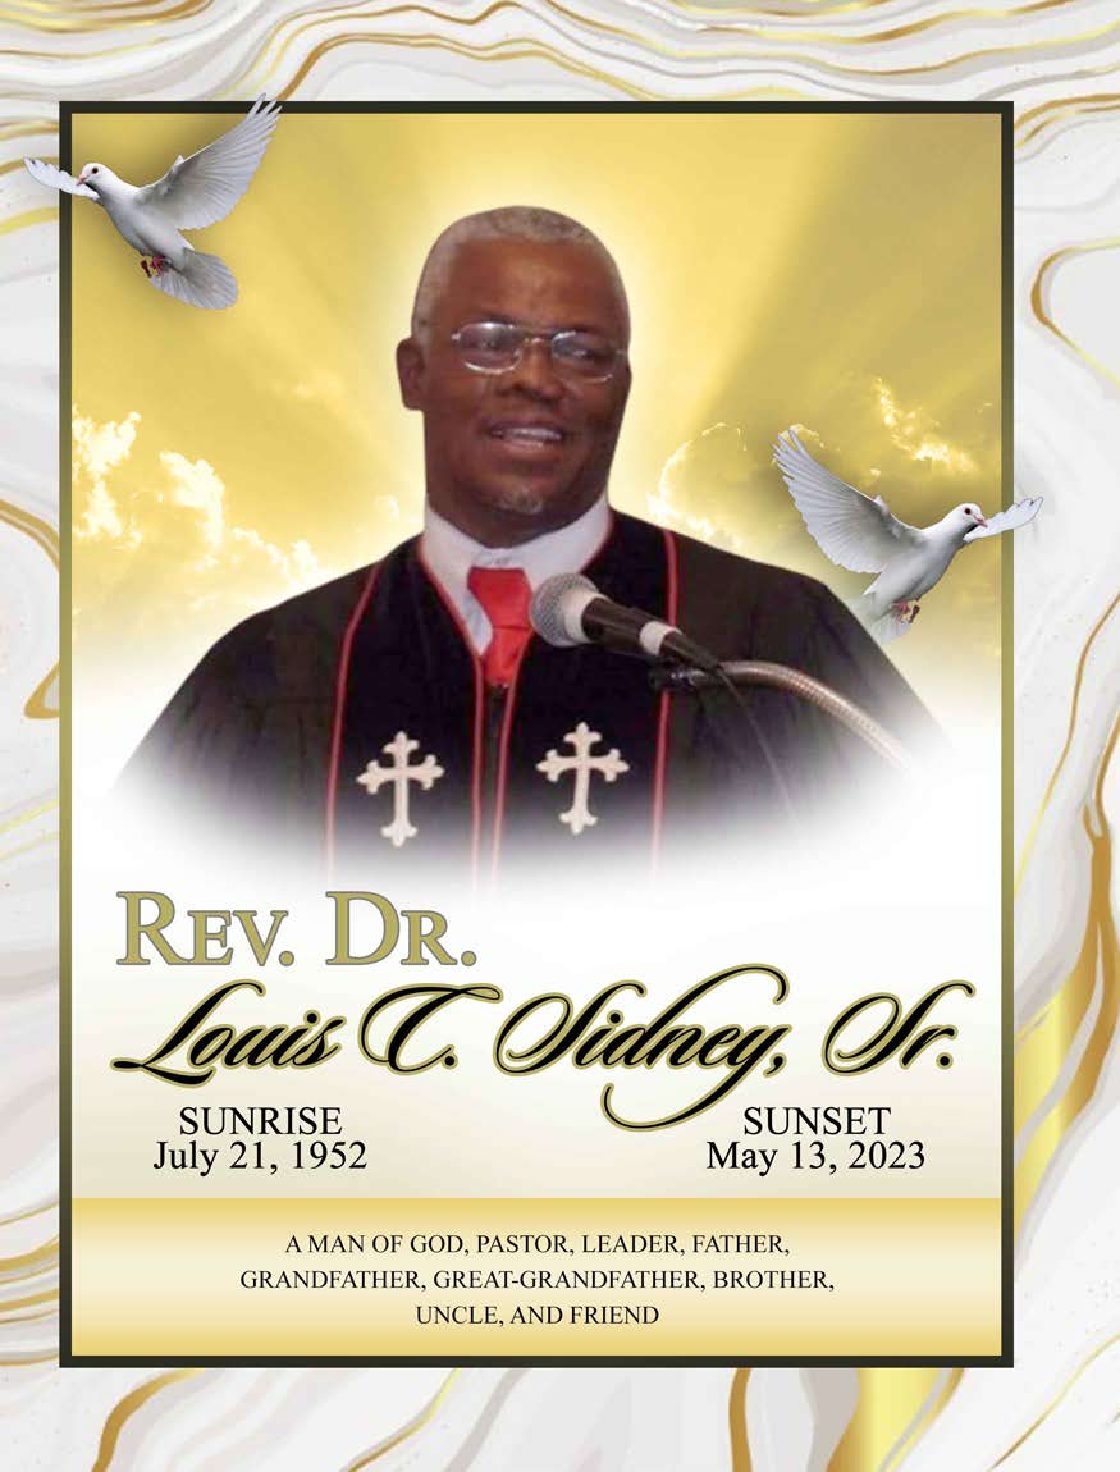 Rev. Dr. Louis C. Sidney Sr. 1952 – 2023